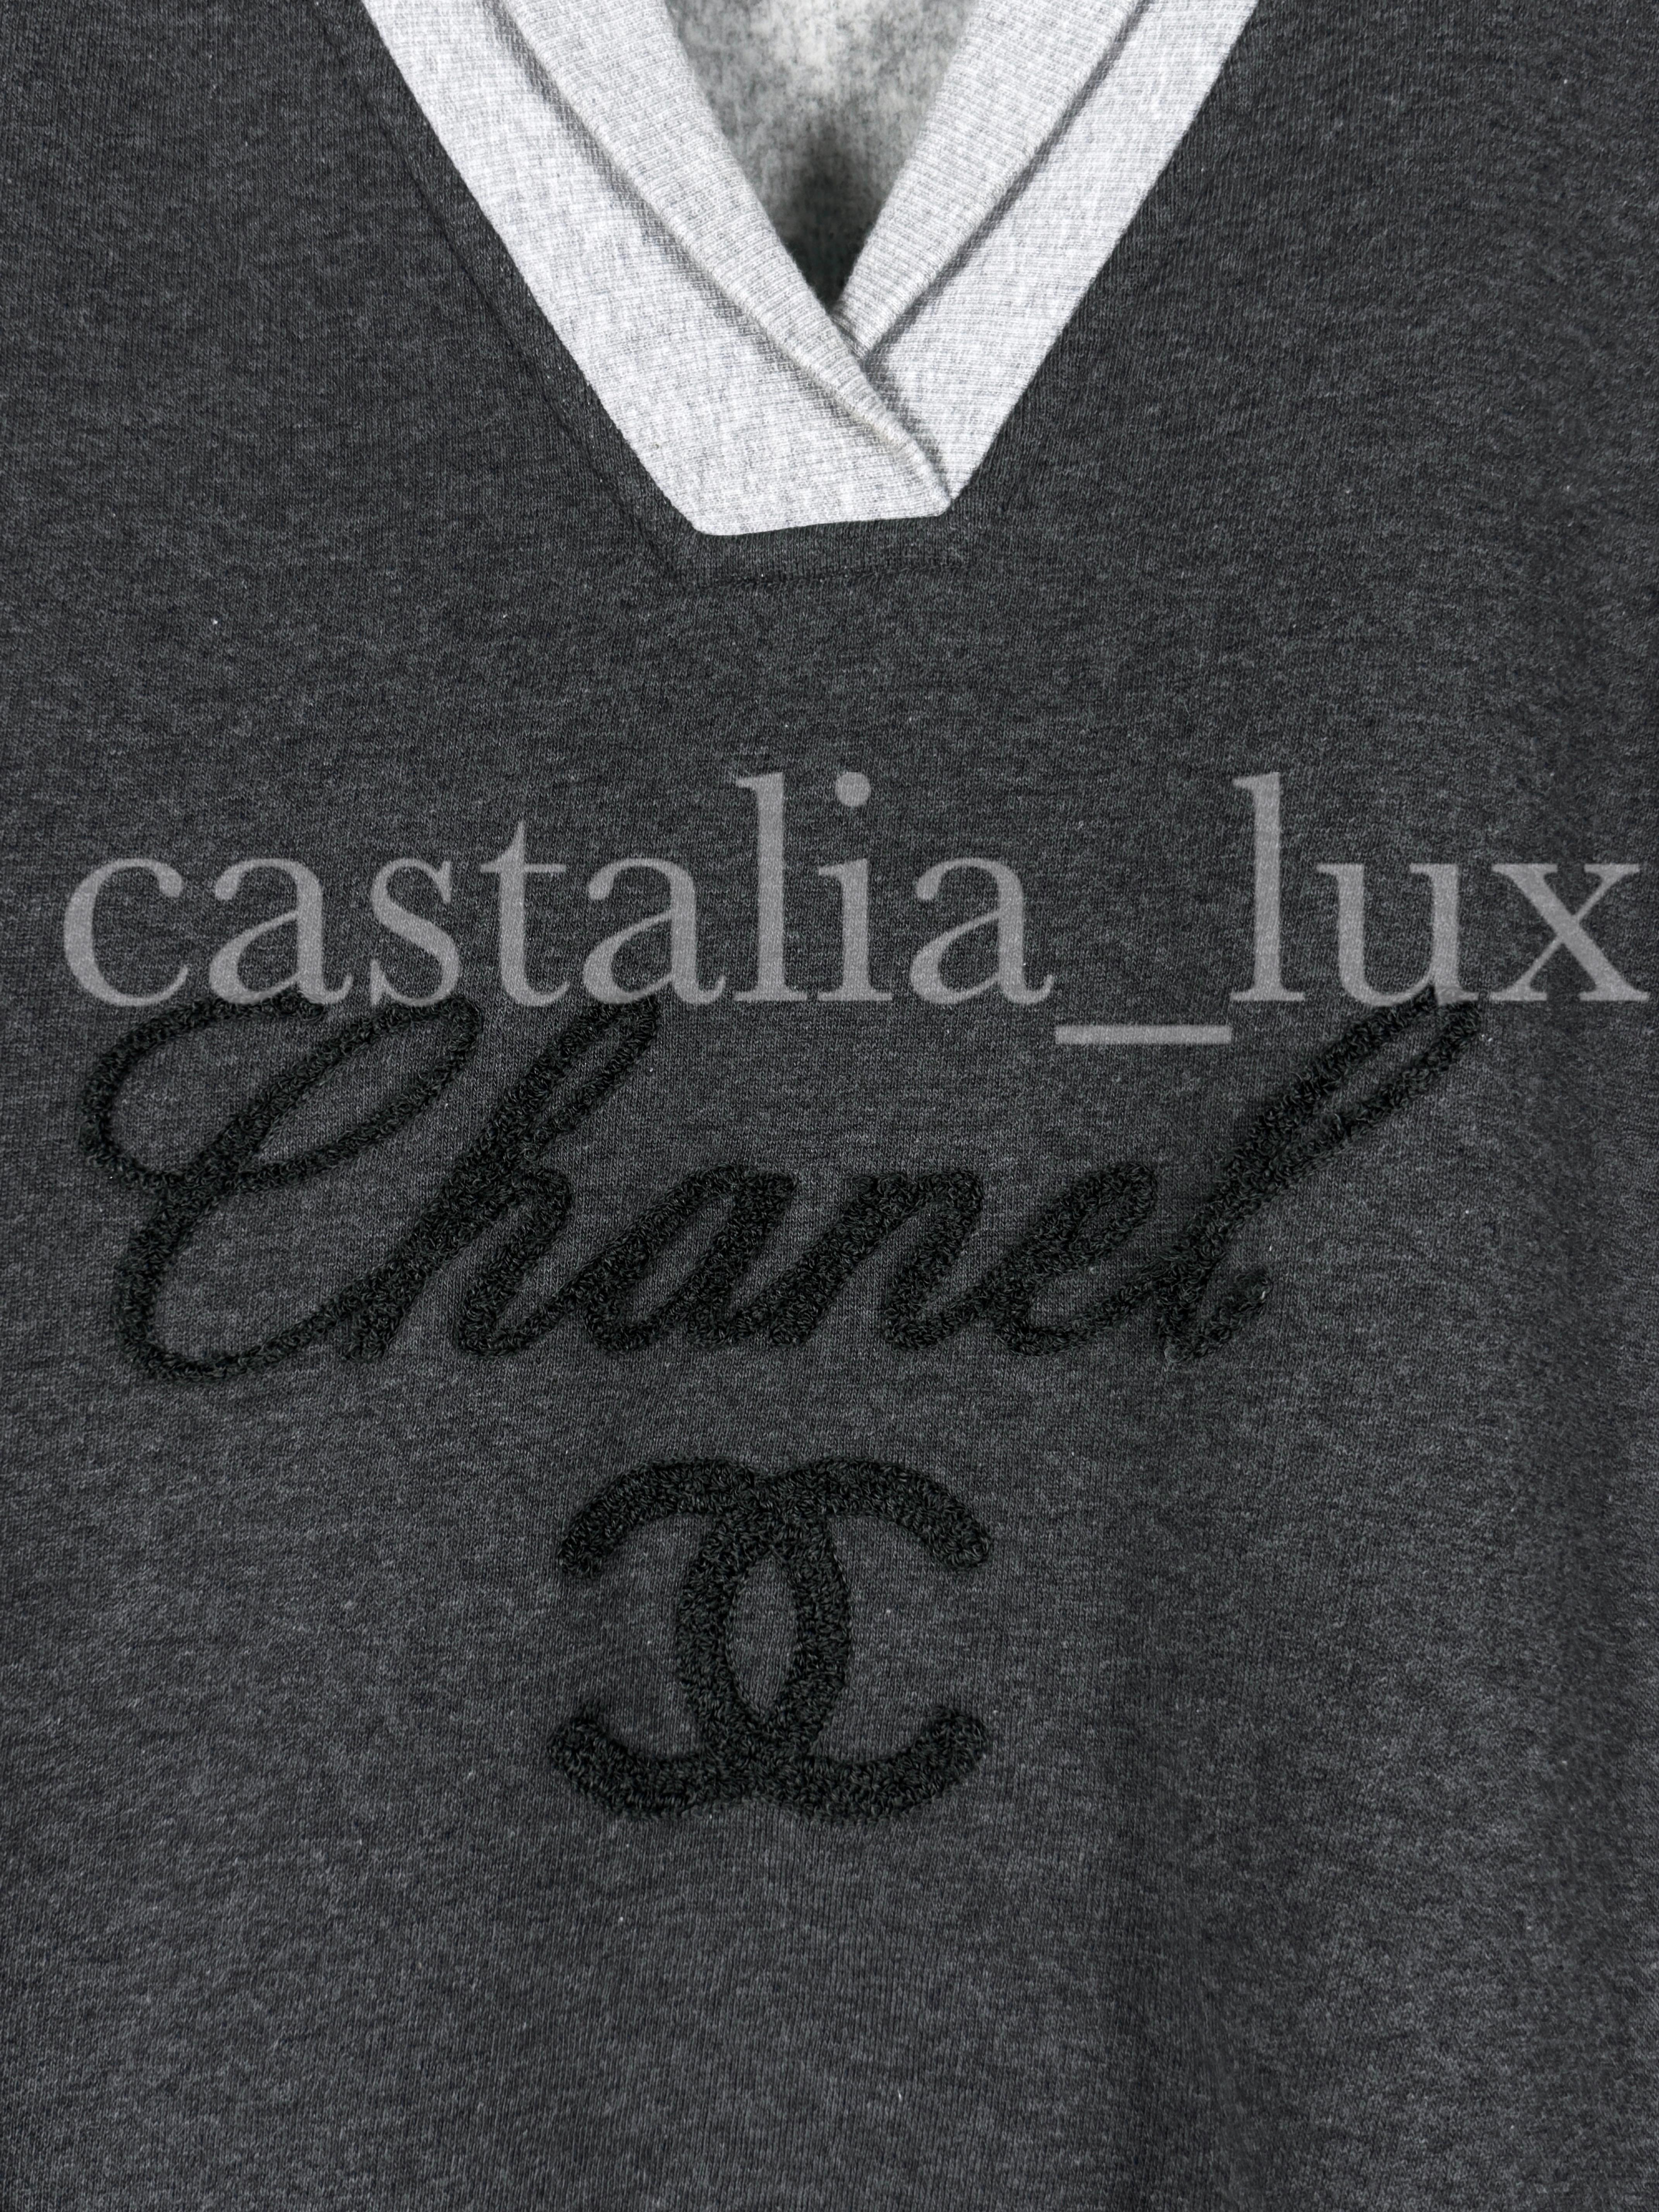 Chanel Super Stylish CC Logo Grey Jumper Vest For Sale 2